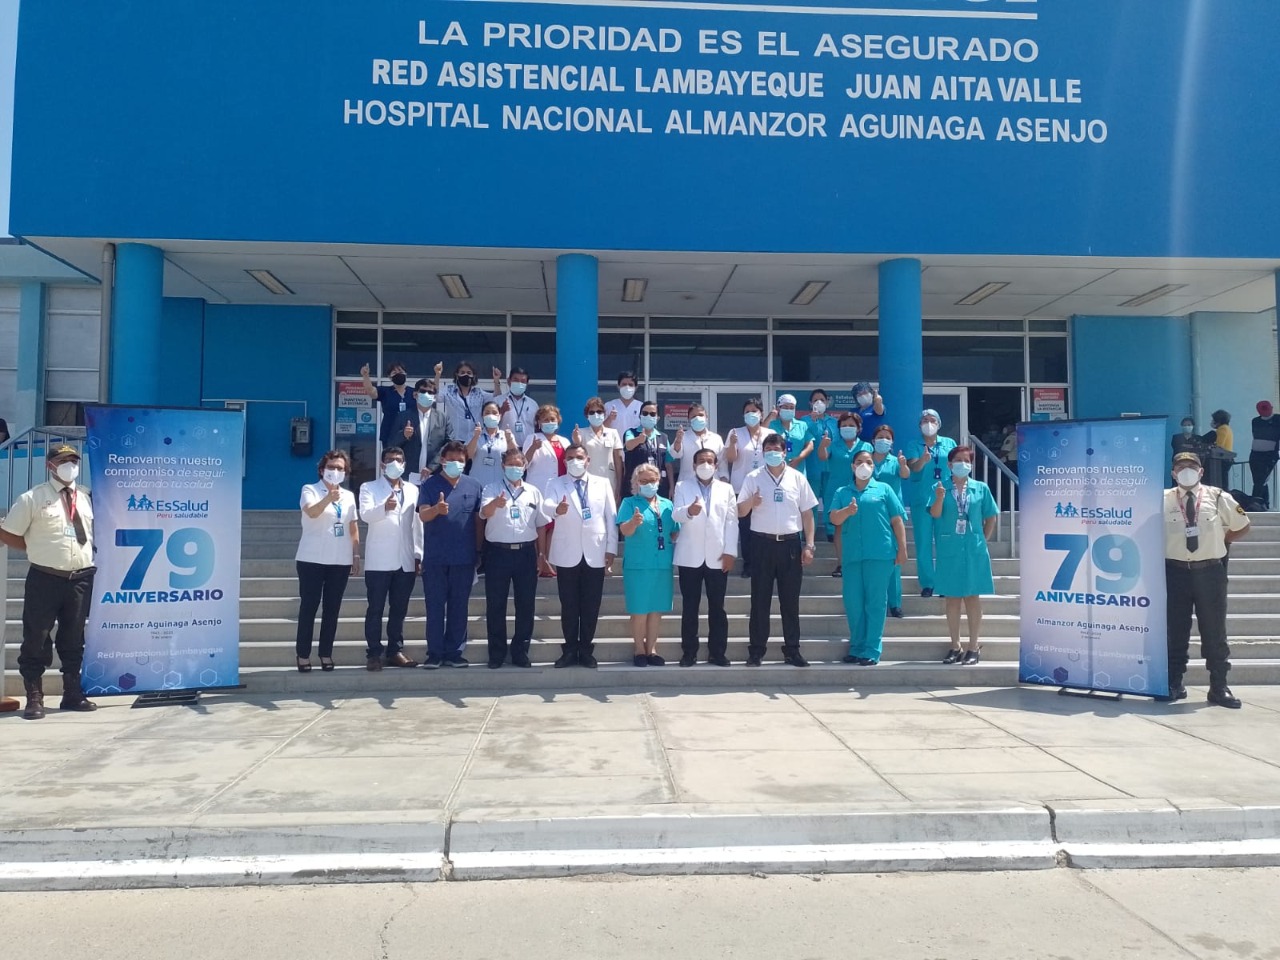 EsSalud Lambayeque: Hospital Nacional Almanzor Aguinaga Asenjo celebra su 79 aniversario